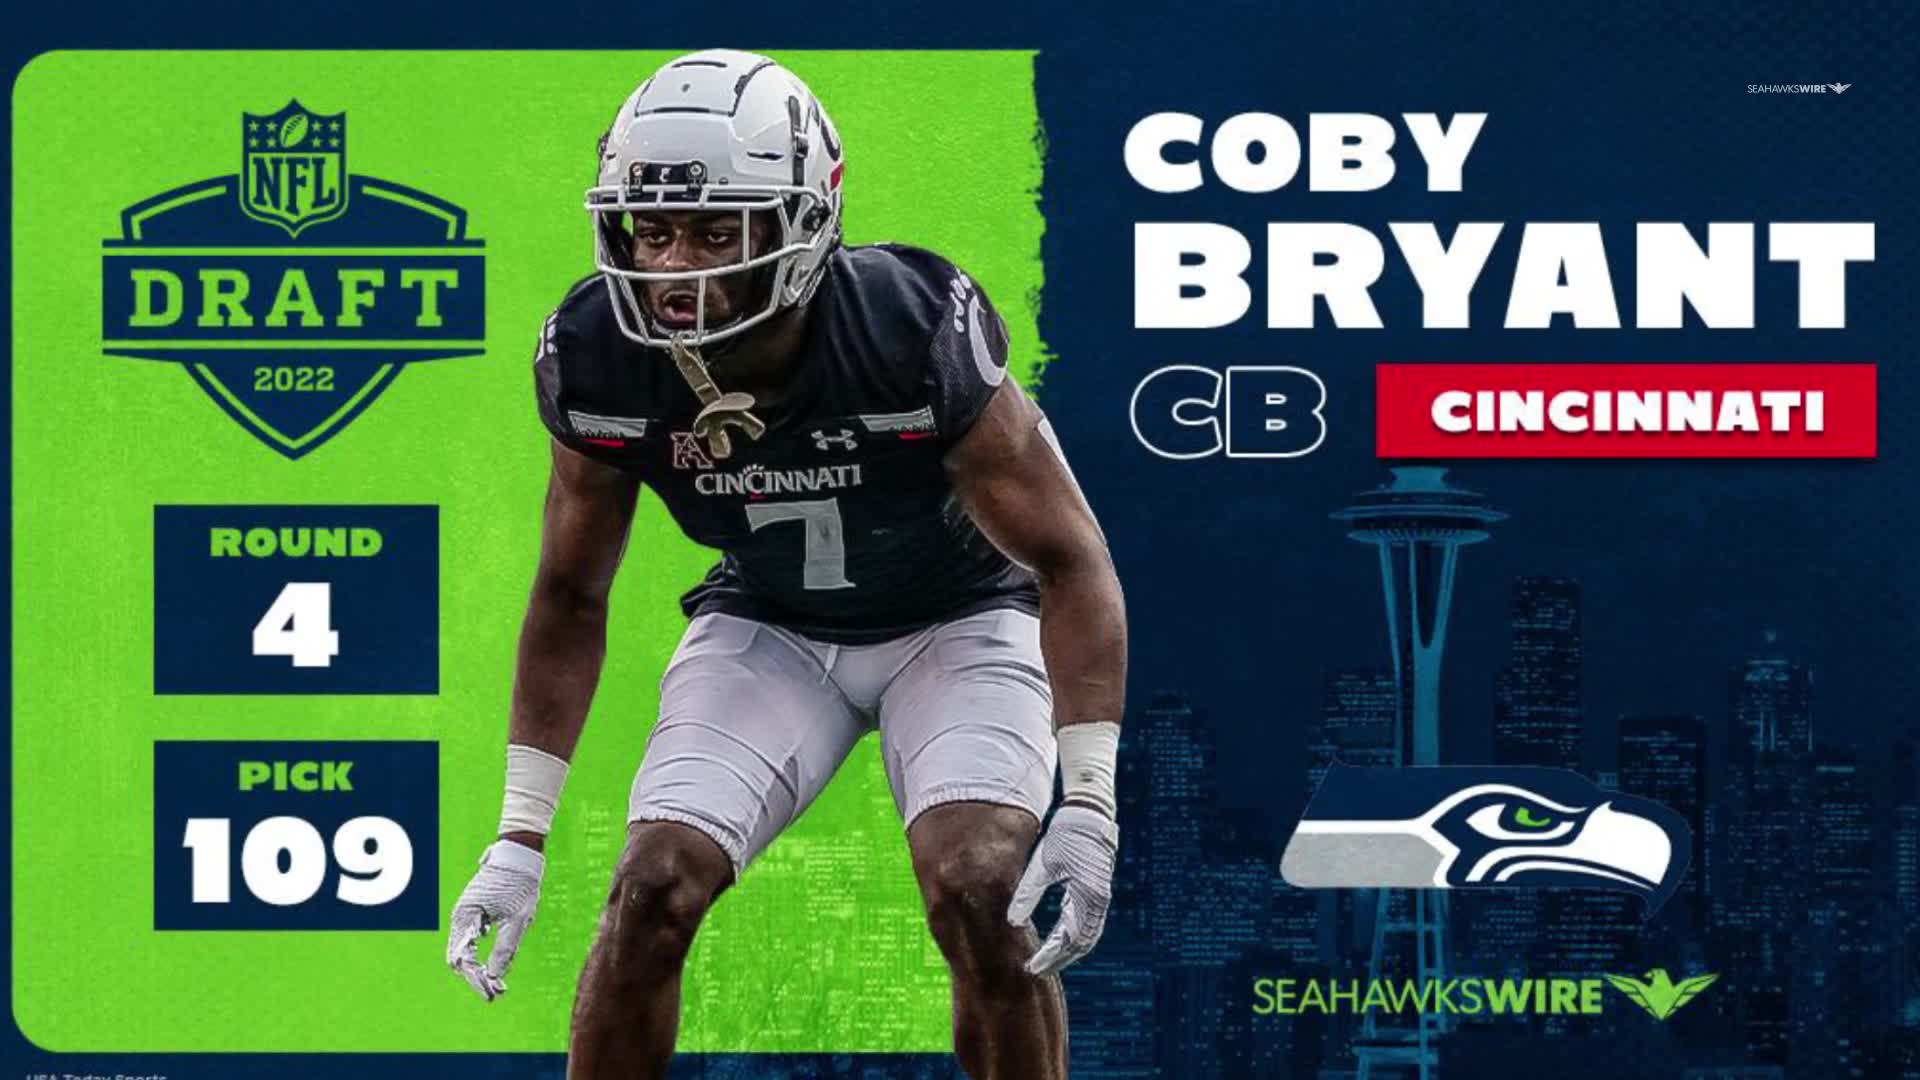 PFF College on X: The Seattle Seahawks pick Cincinnati CB Coby